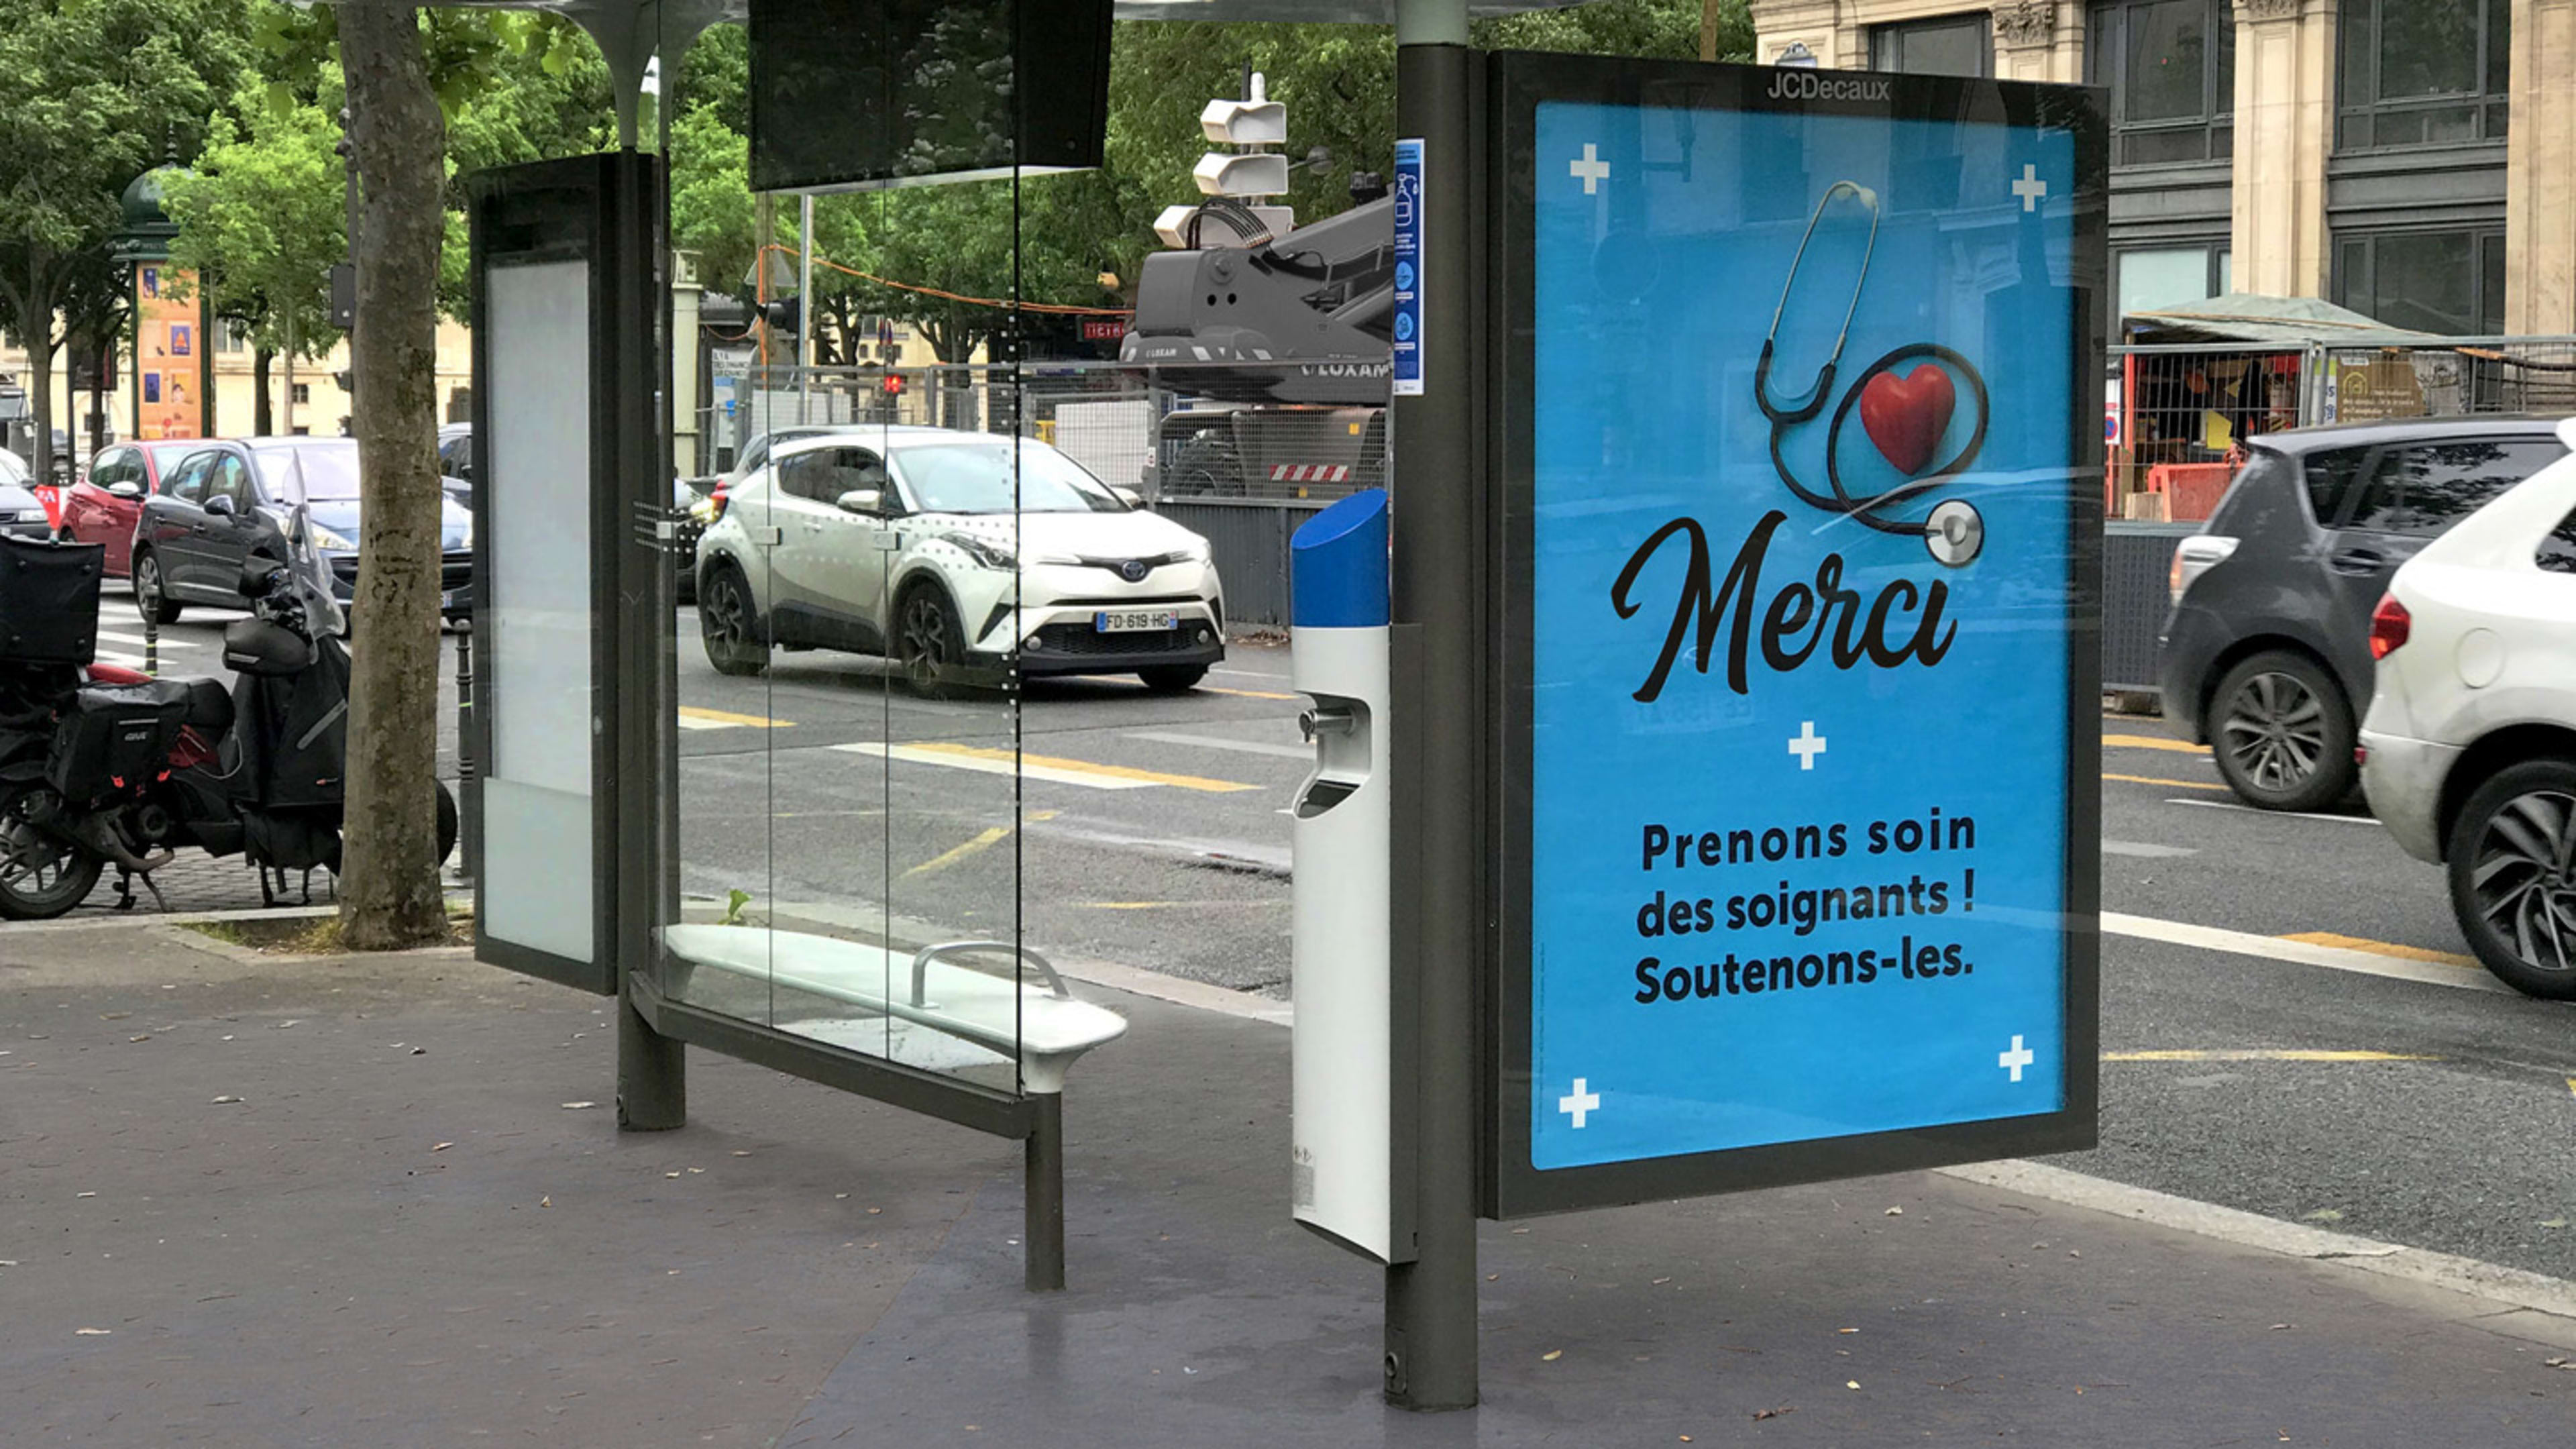 Paris installs hundreds of free hand sanitizer stations around the city